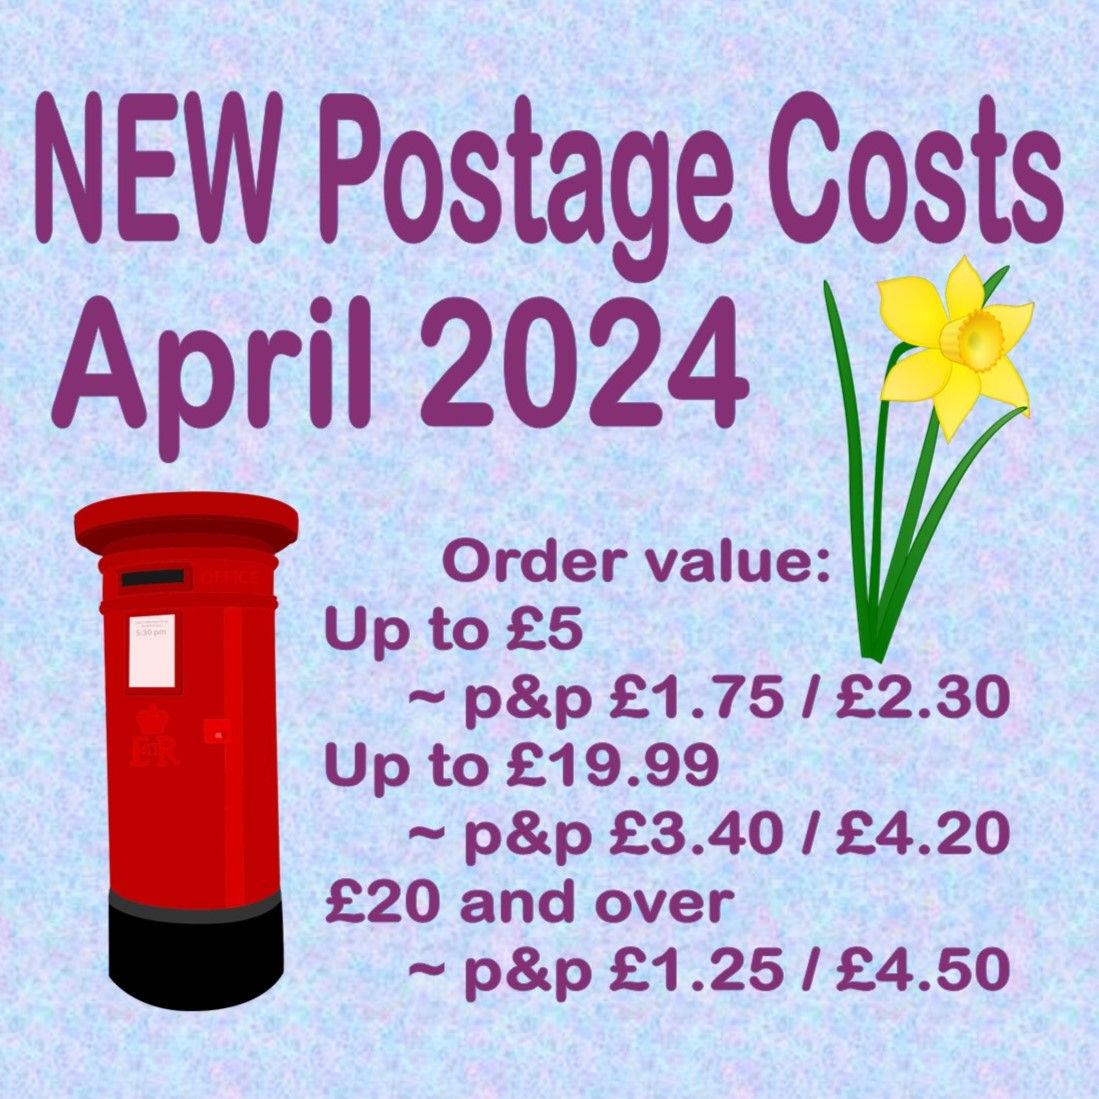 Post box alongside text and a daffodil